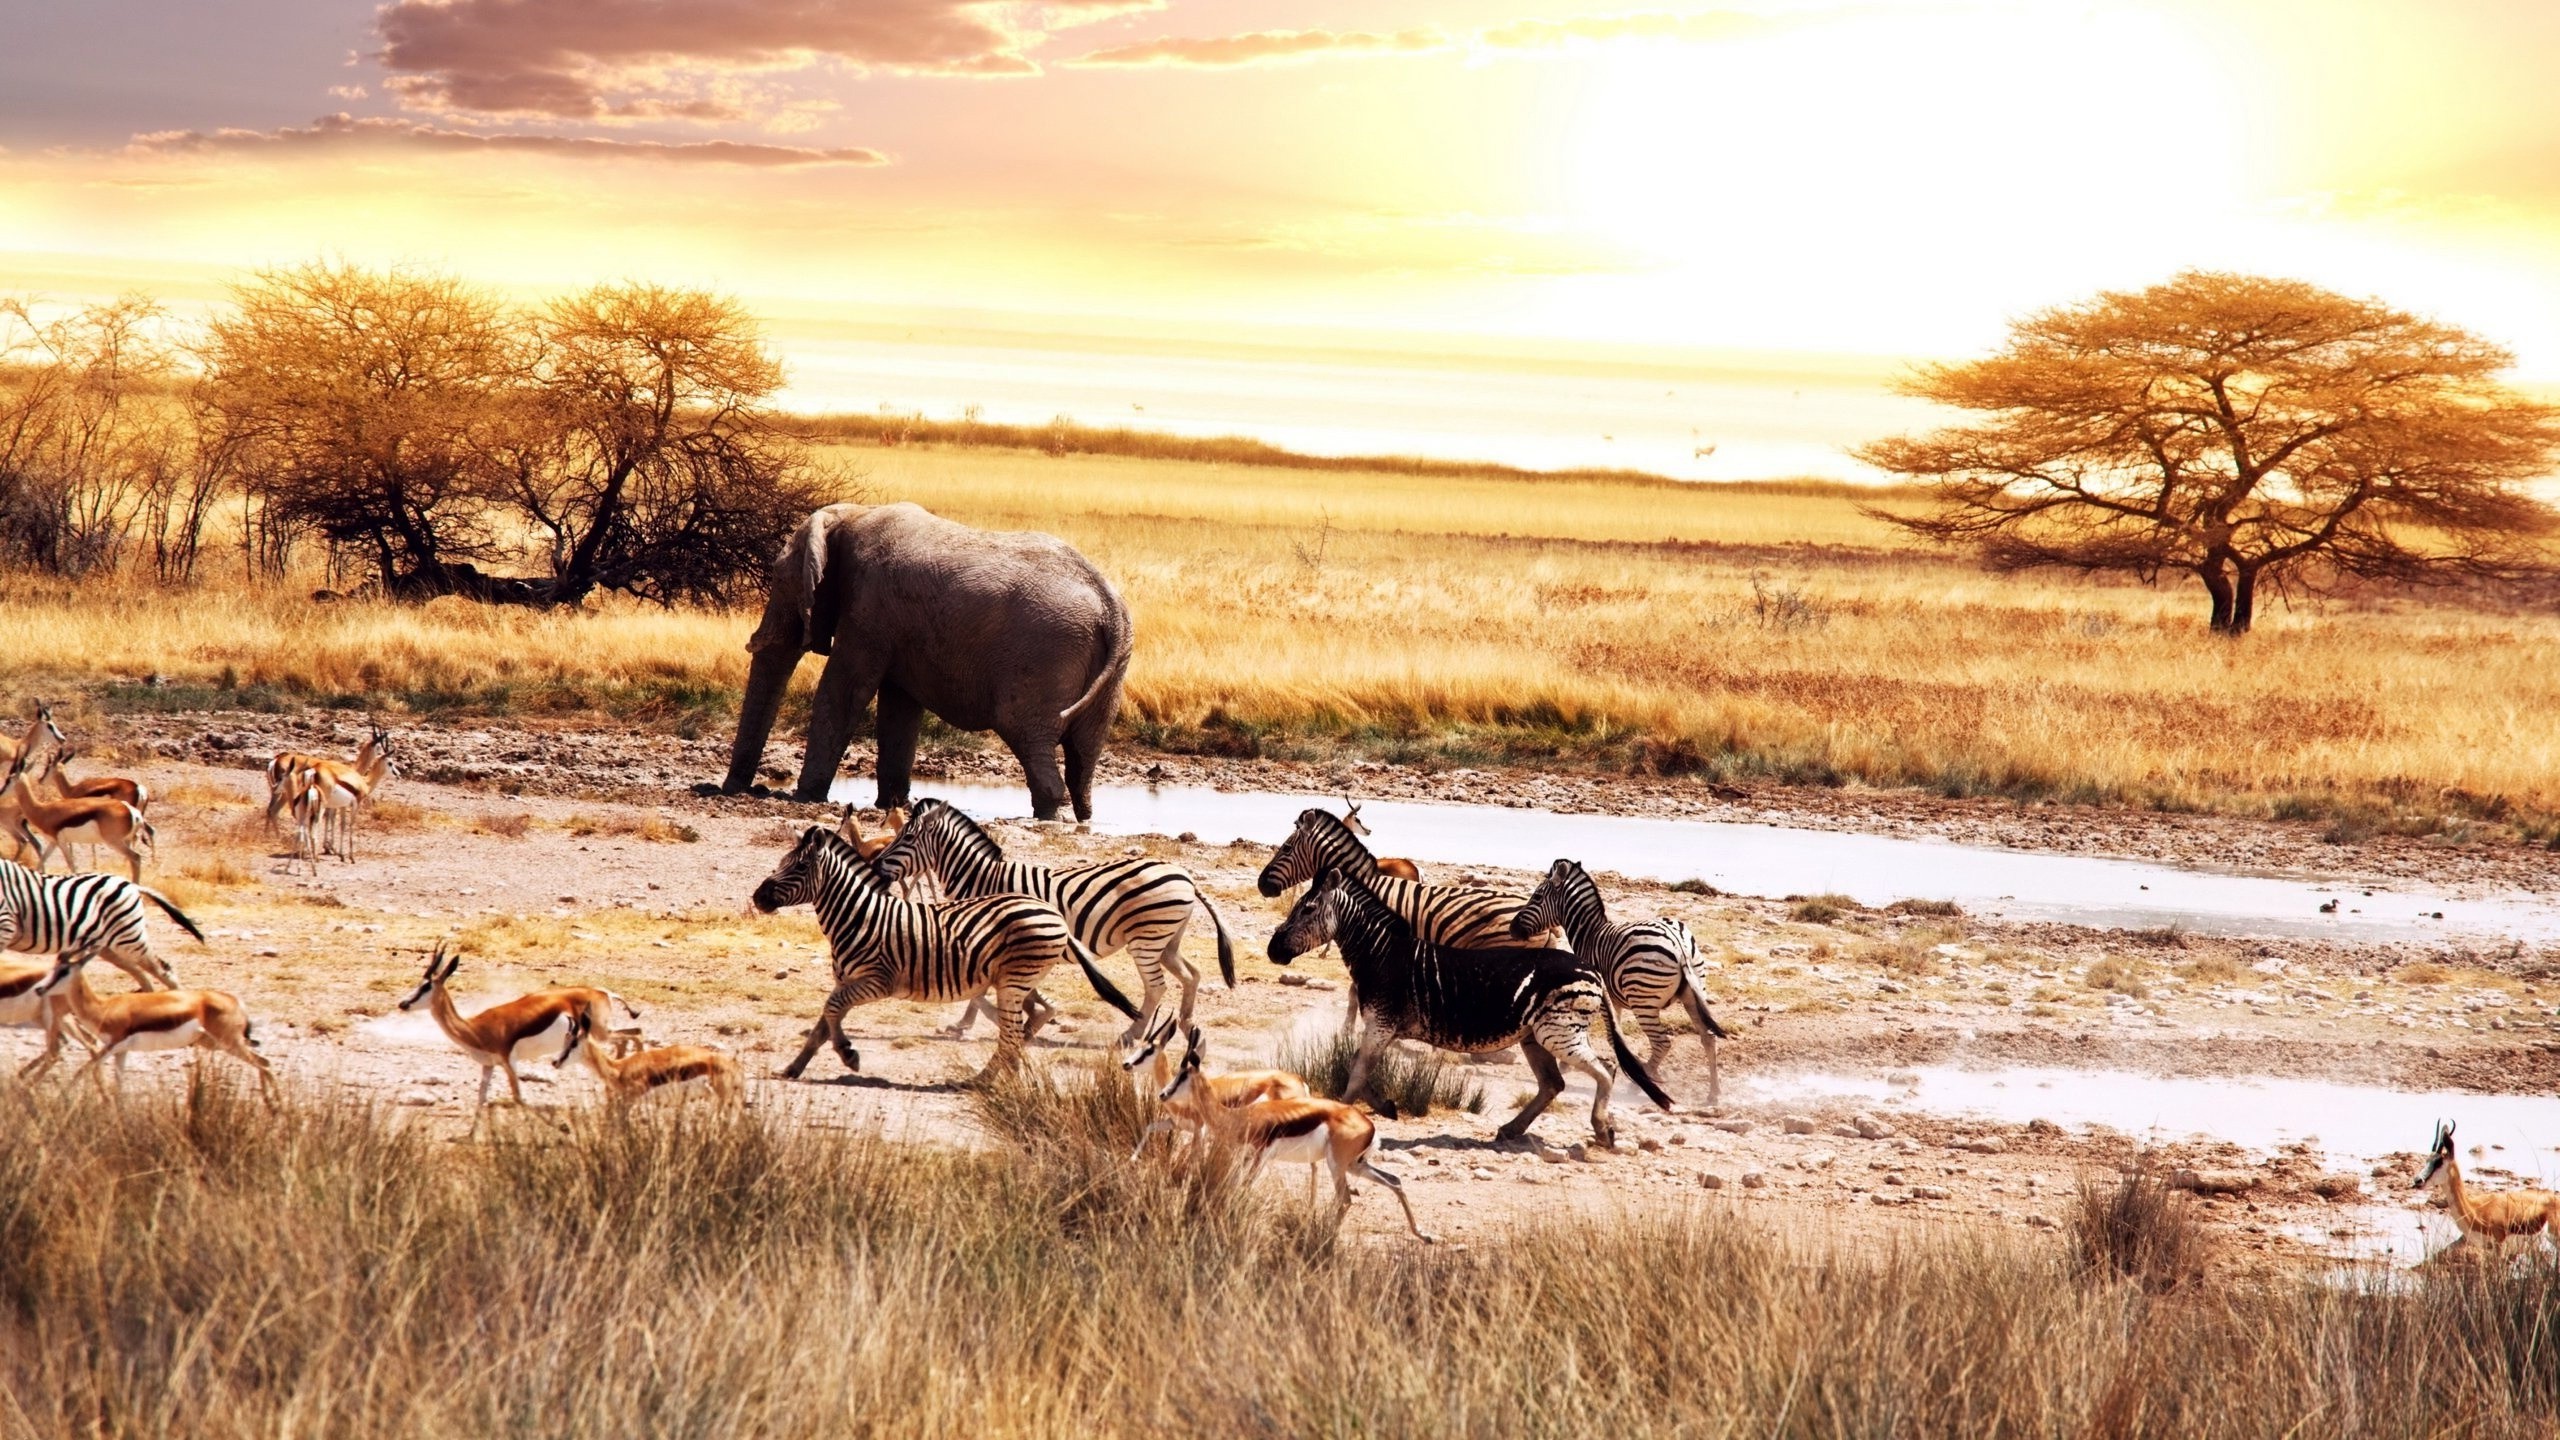 General 2560x1440 Africa elephant zebras wildlife animals savannah mammals nature landscape sunlight dry grass